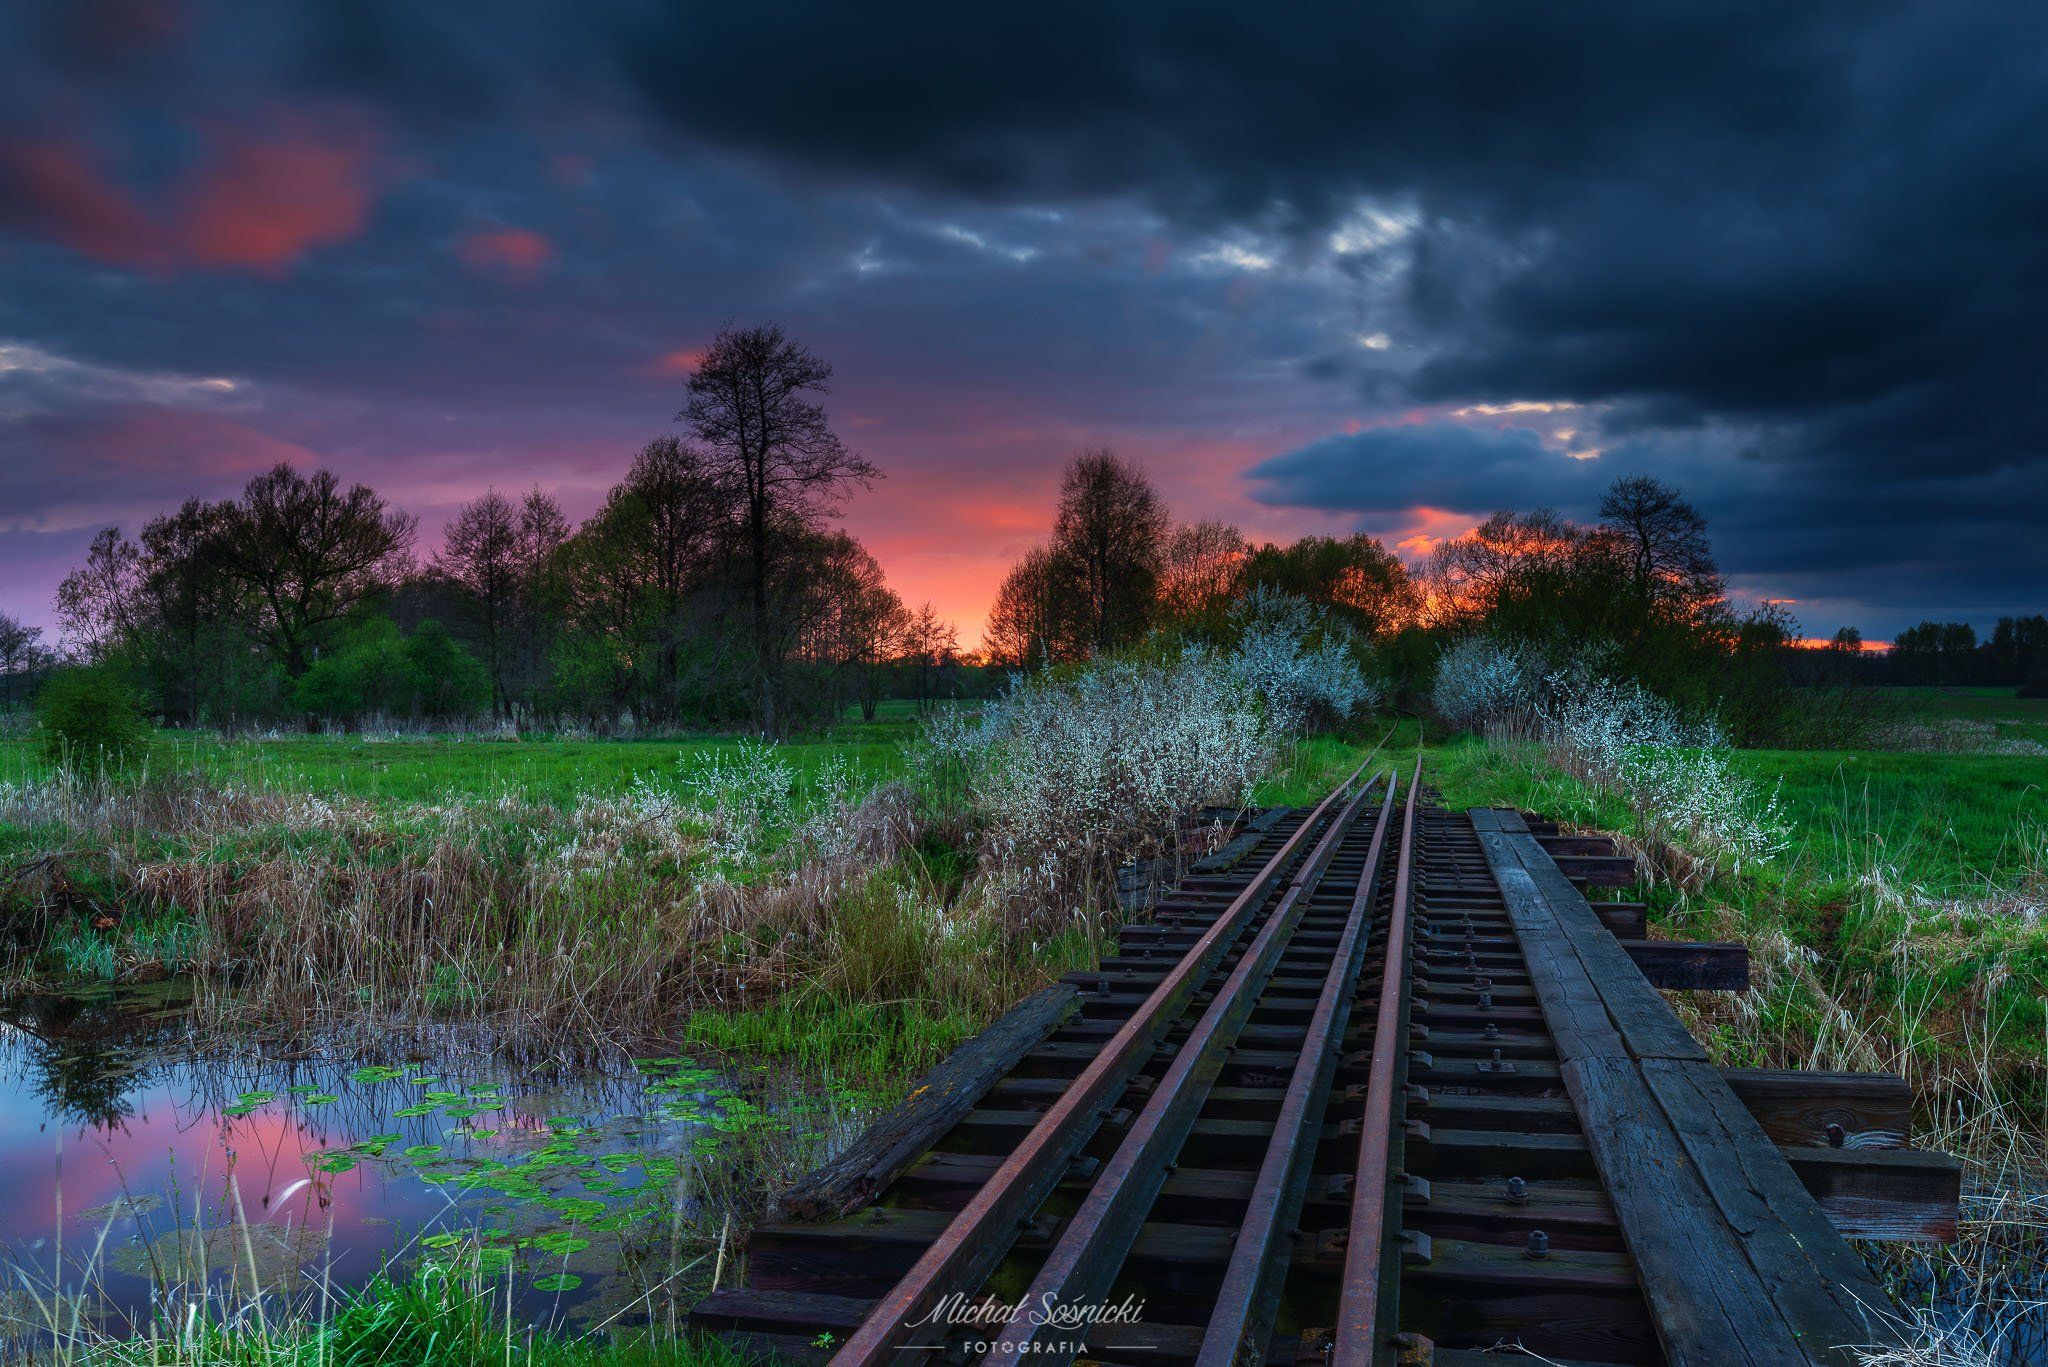 #sunset #poland #ponidzie #train #trees #water #sky #dramatic #nature #pentax #benro #benq, Michał Sośnicki